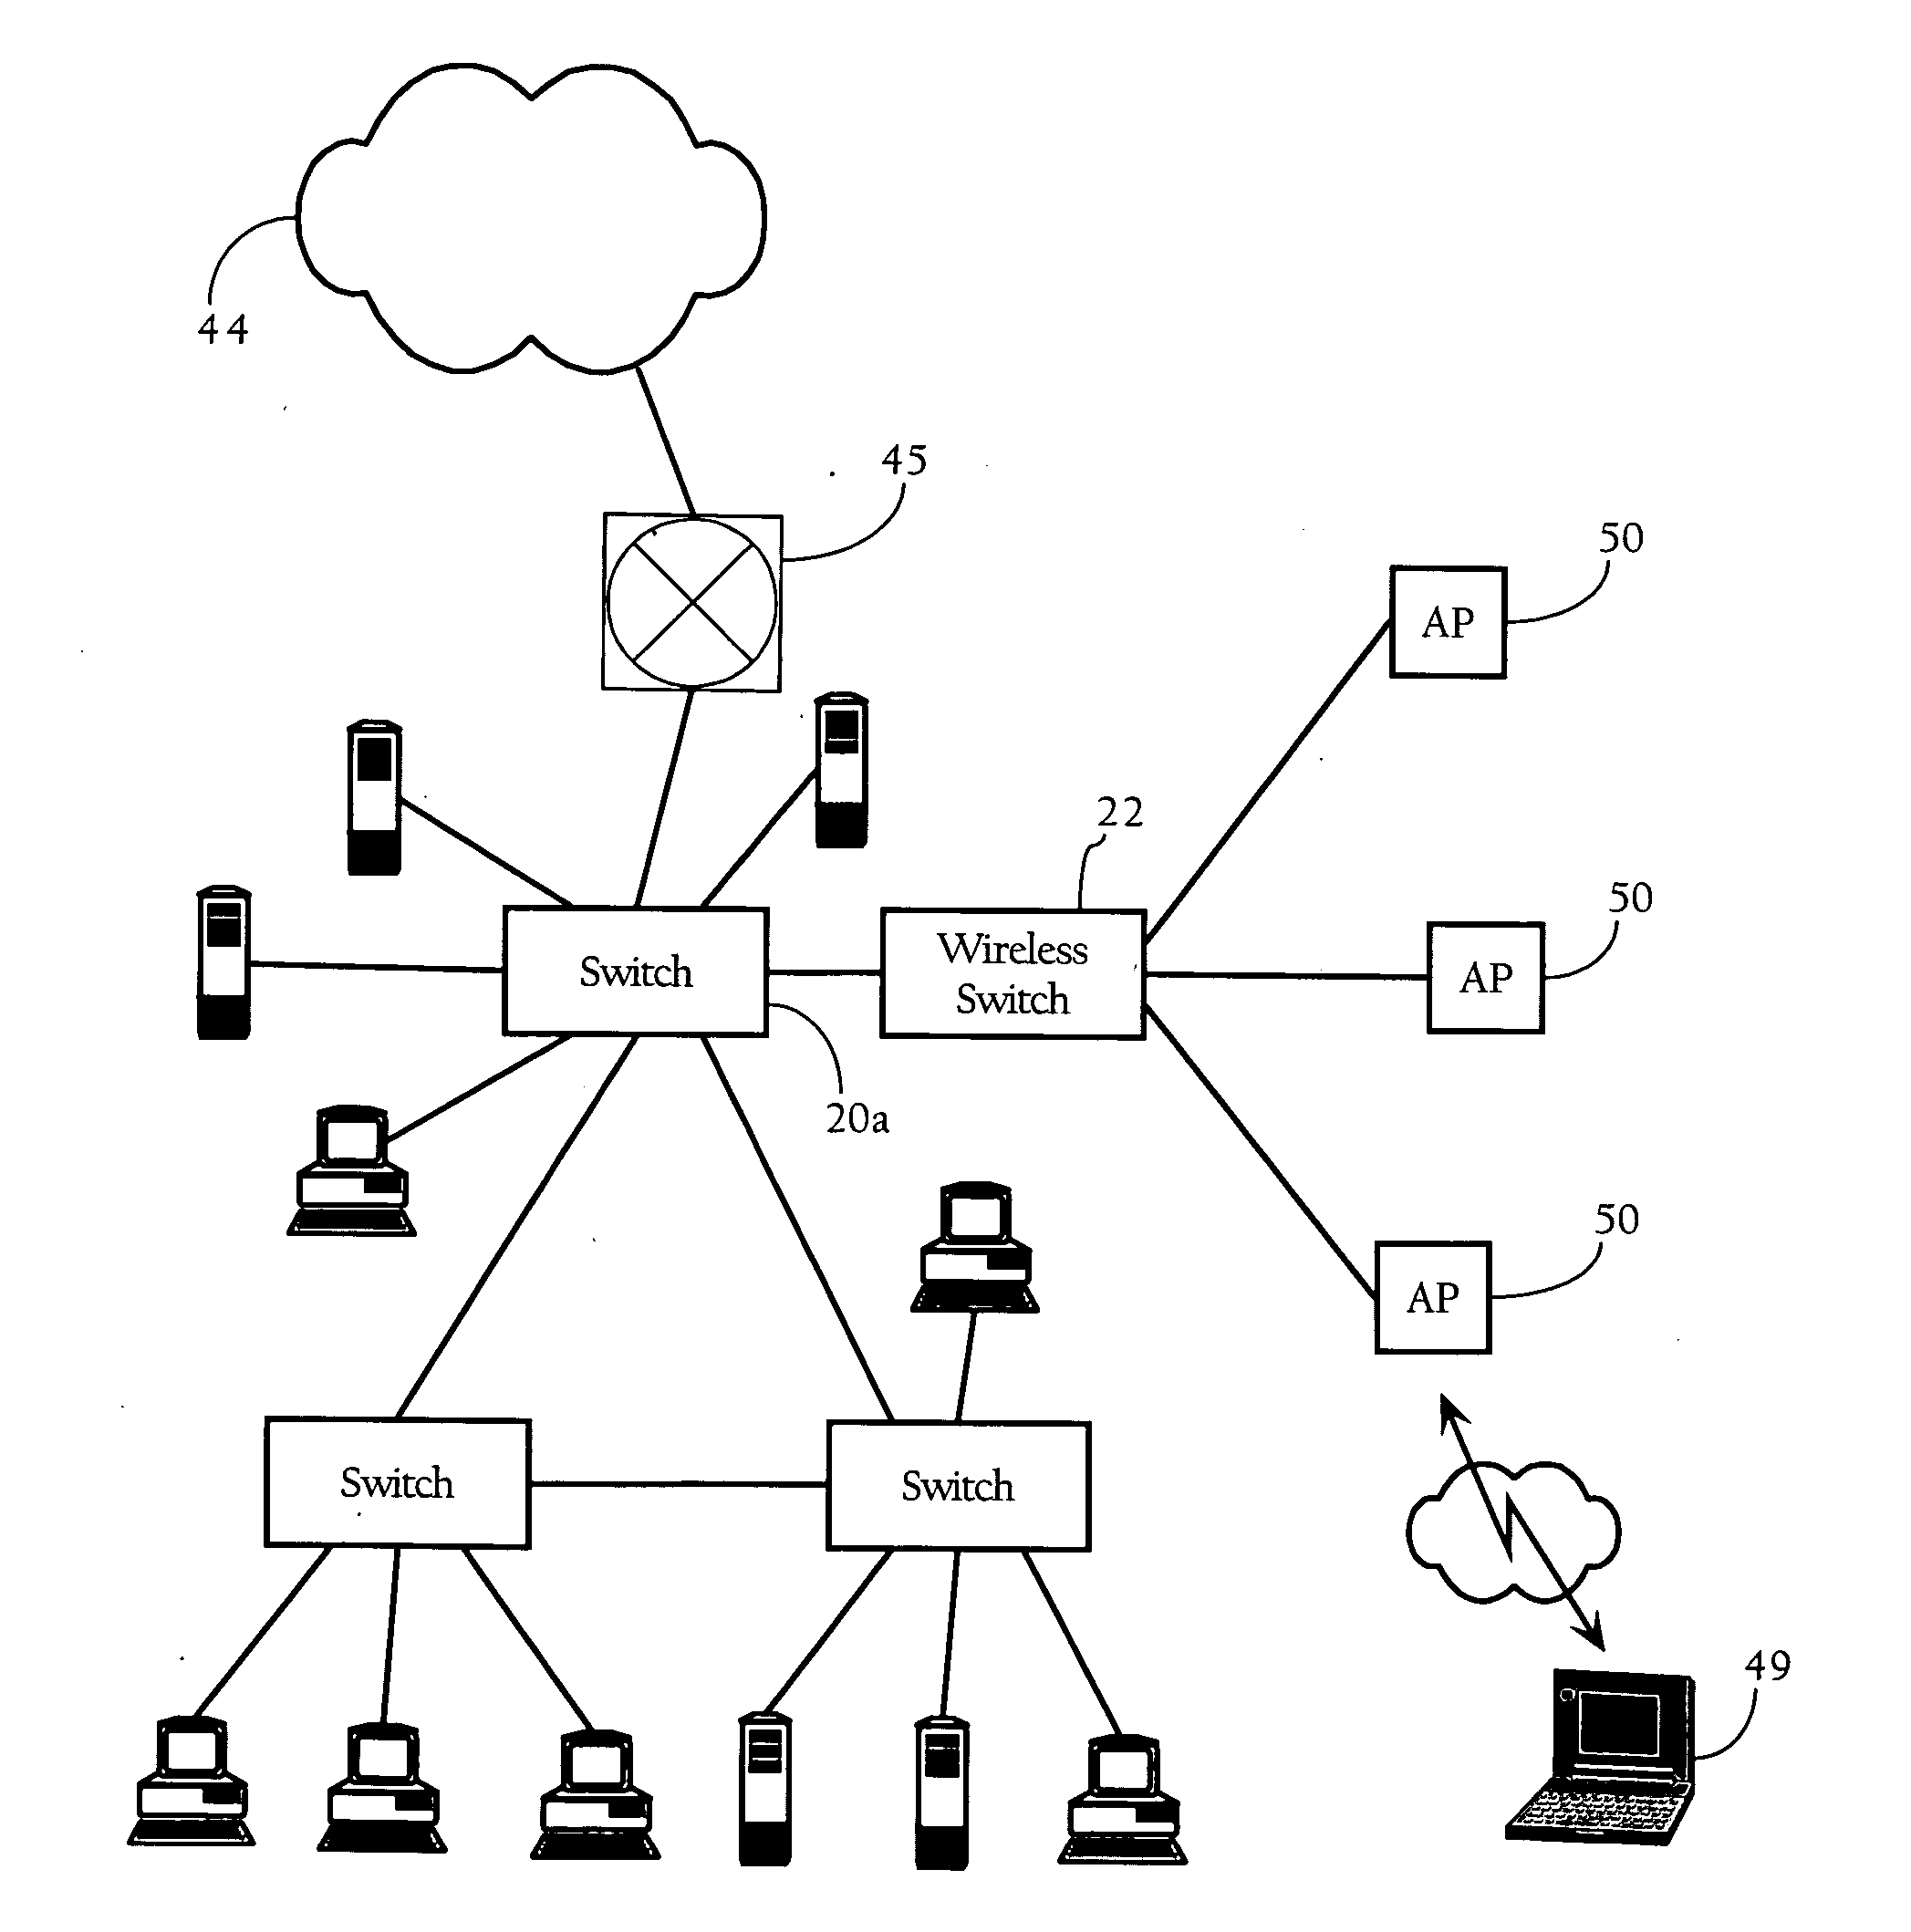 Blocked redundant link-aware spanning tree protocol enhancement